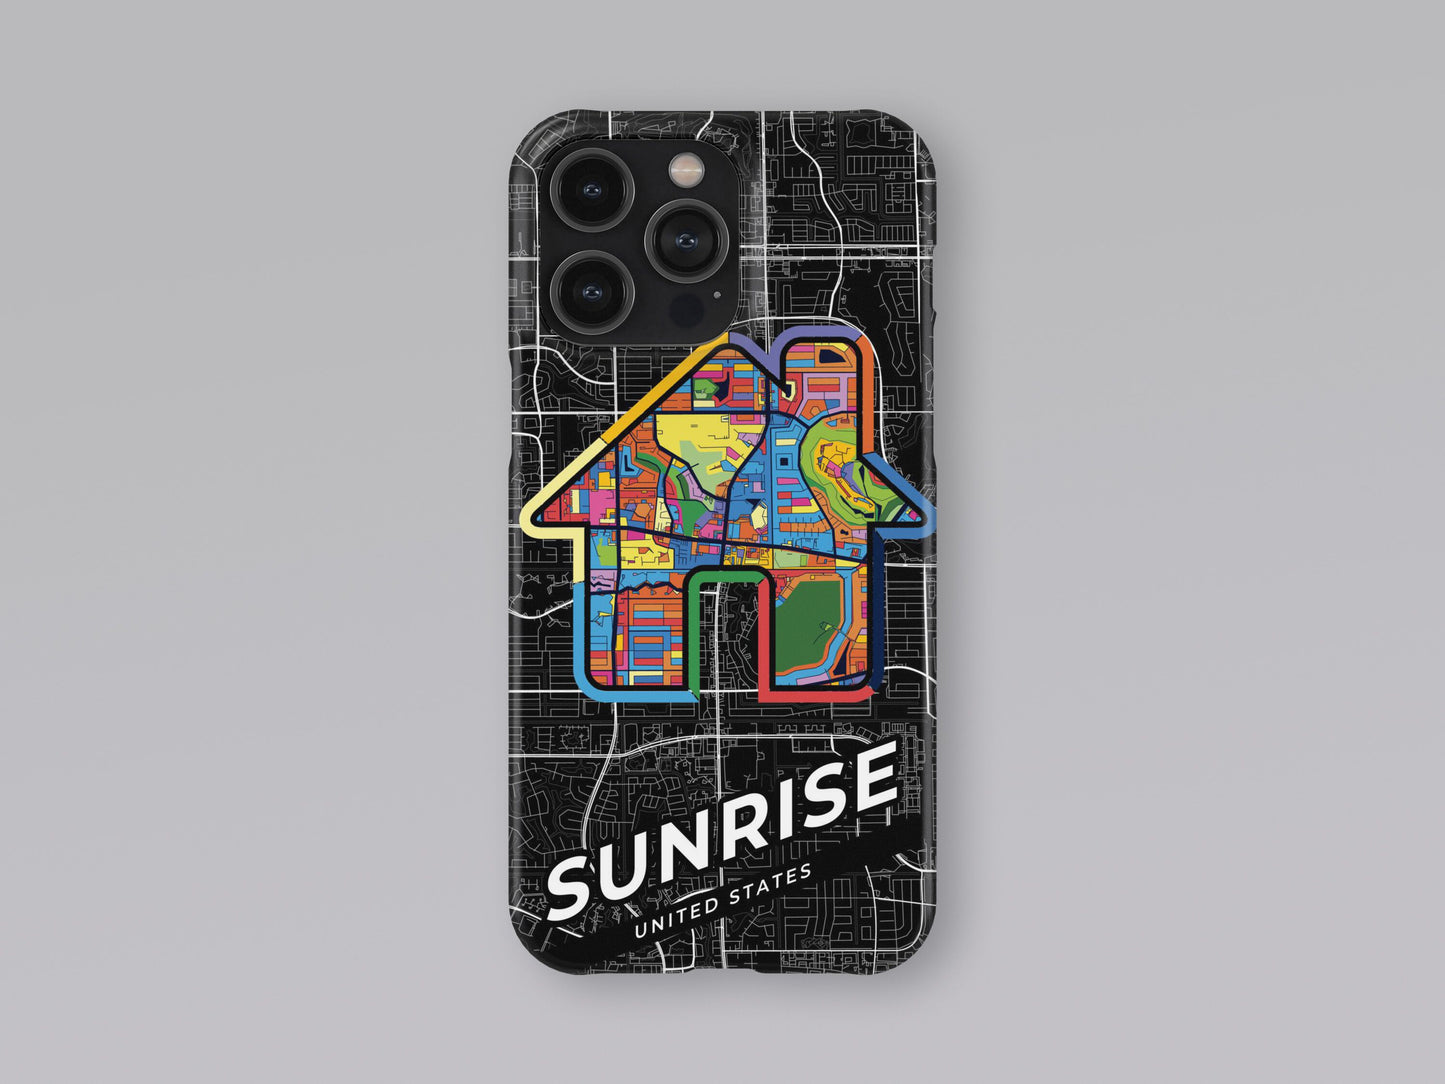 Sunrise Florida slim phone case with colorful icon 3